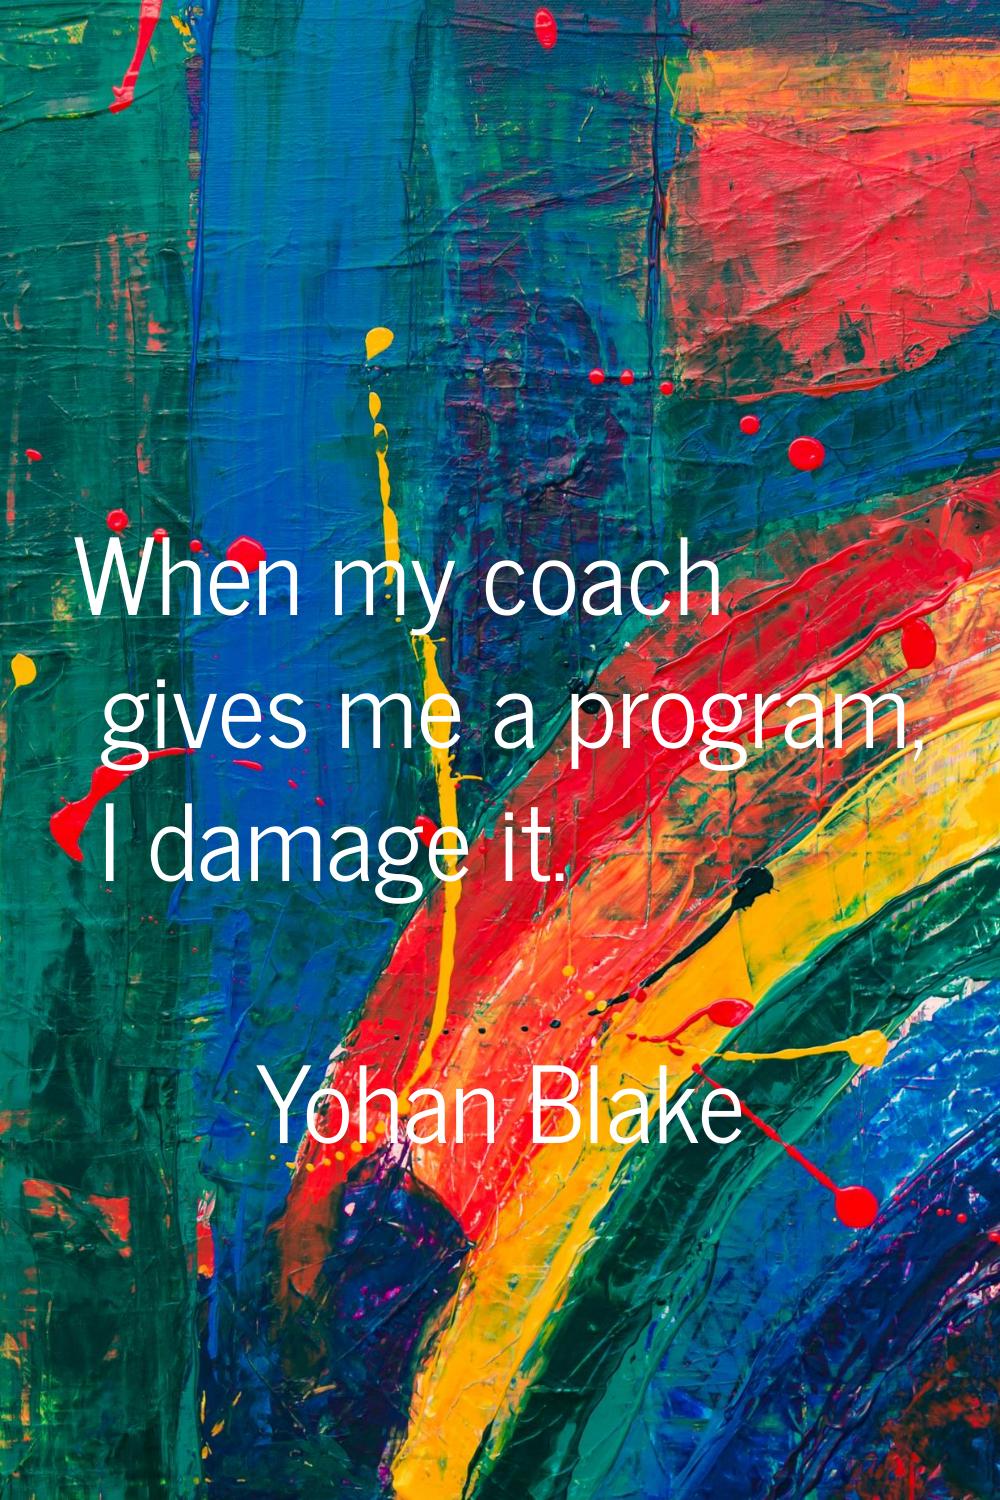 When my coach gives me a program, I damage it.